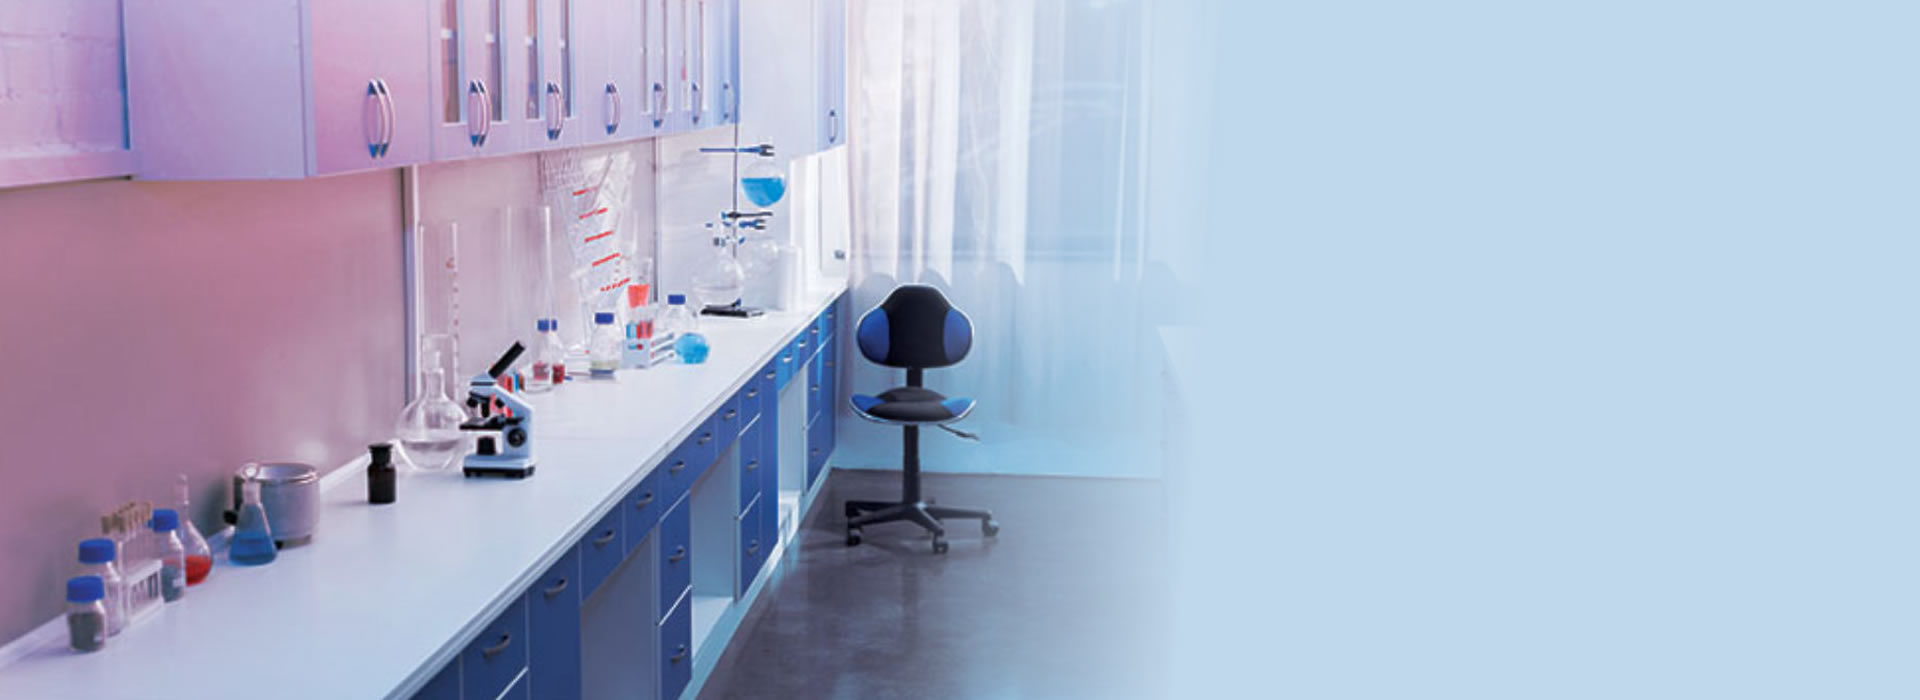 Supply /Install & Maintain/ High Quality/ Laboratory Equipment